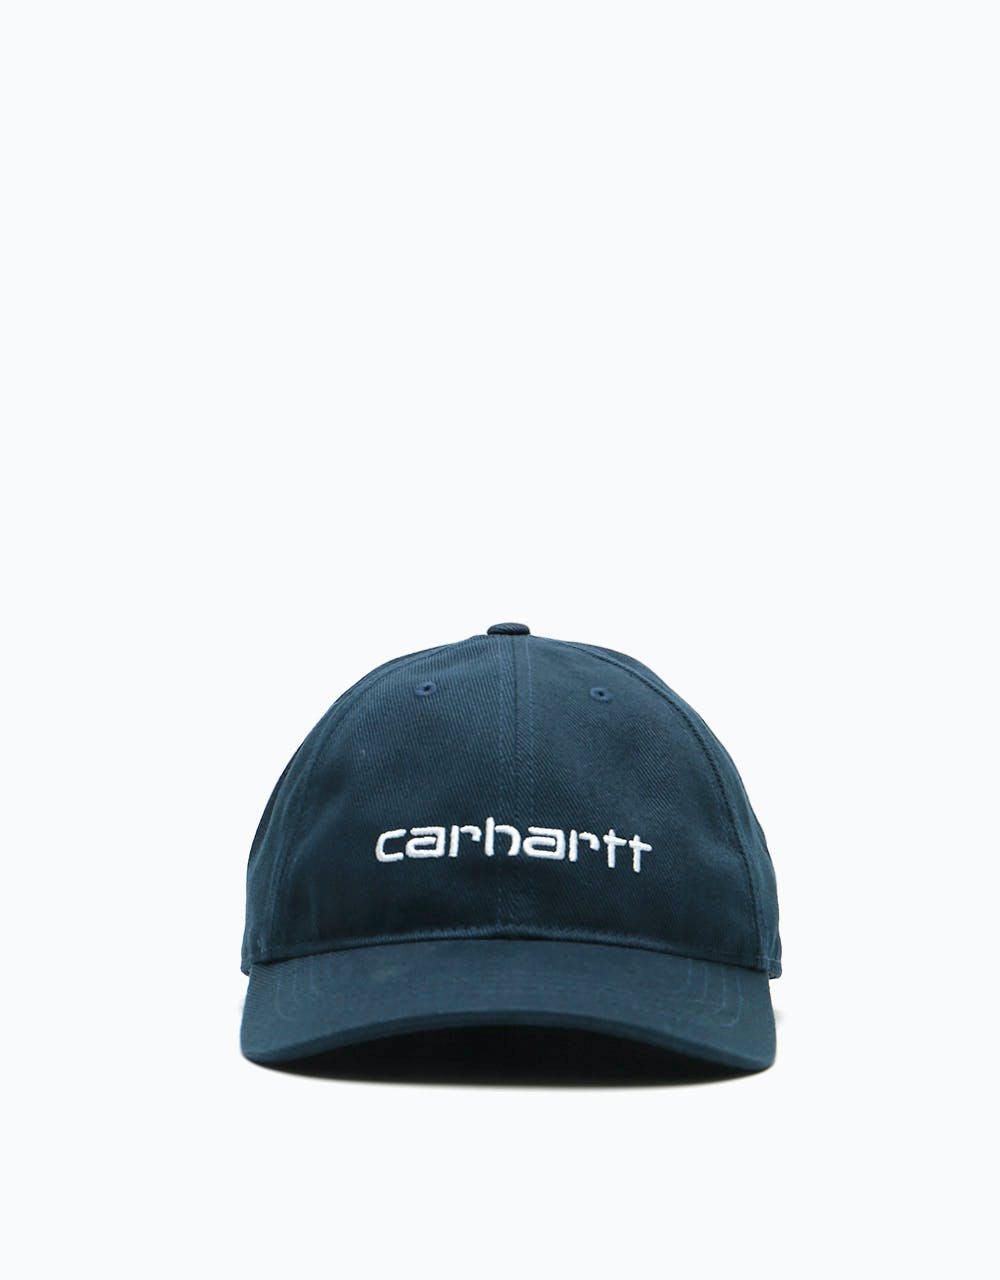 Carhartt WIP Carter Strapback Cap - Duck Blue/White